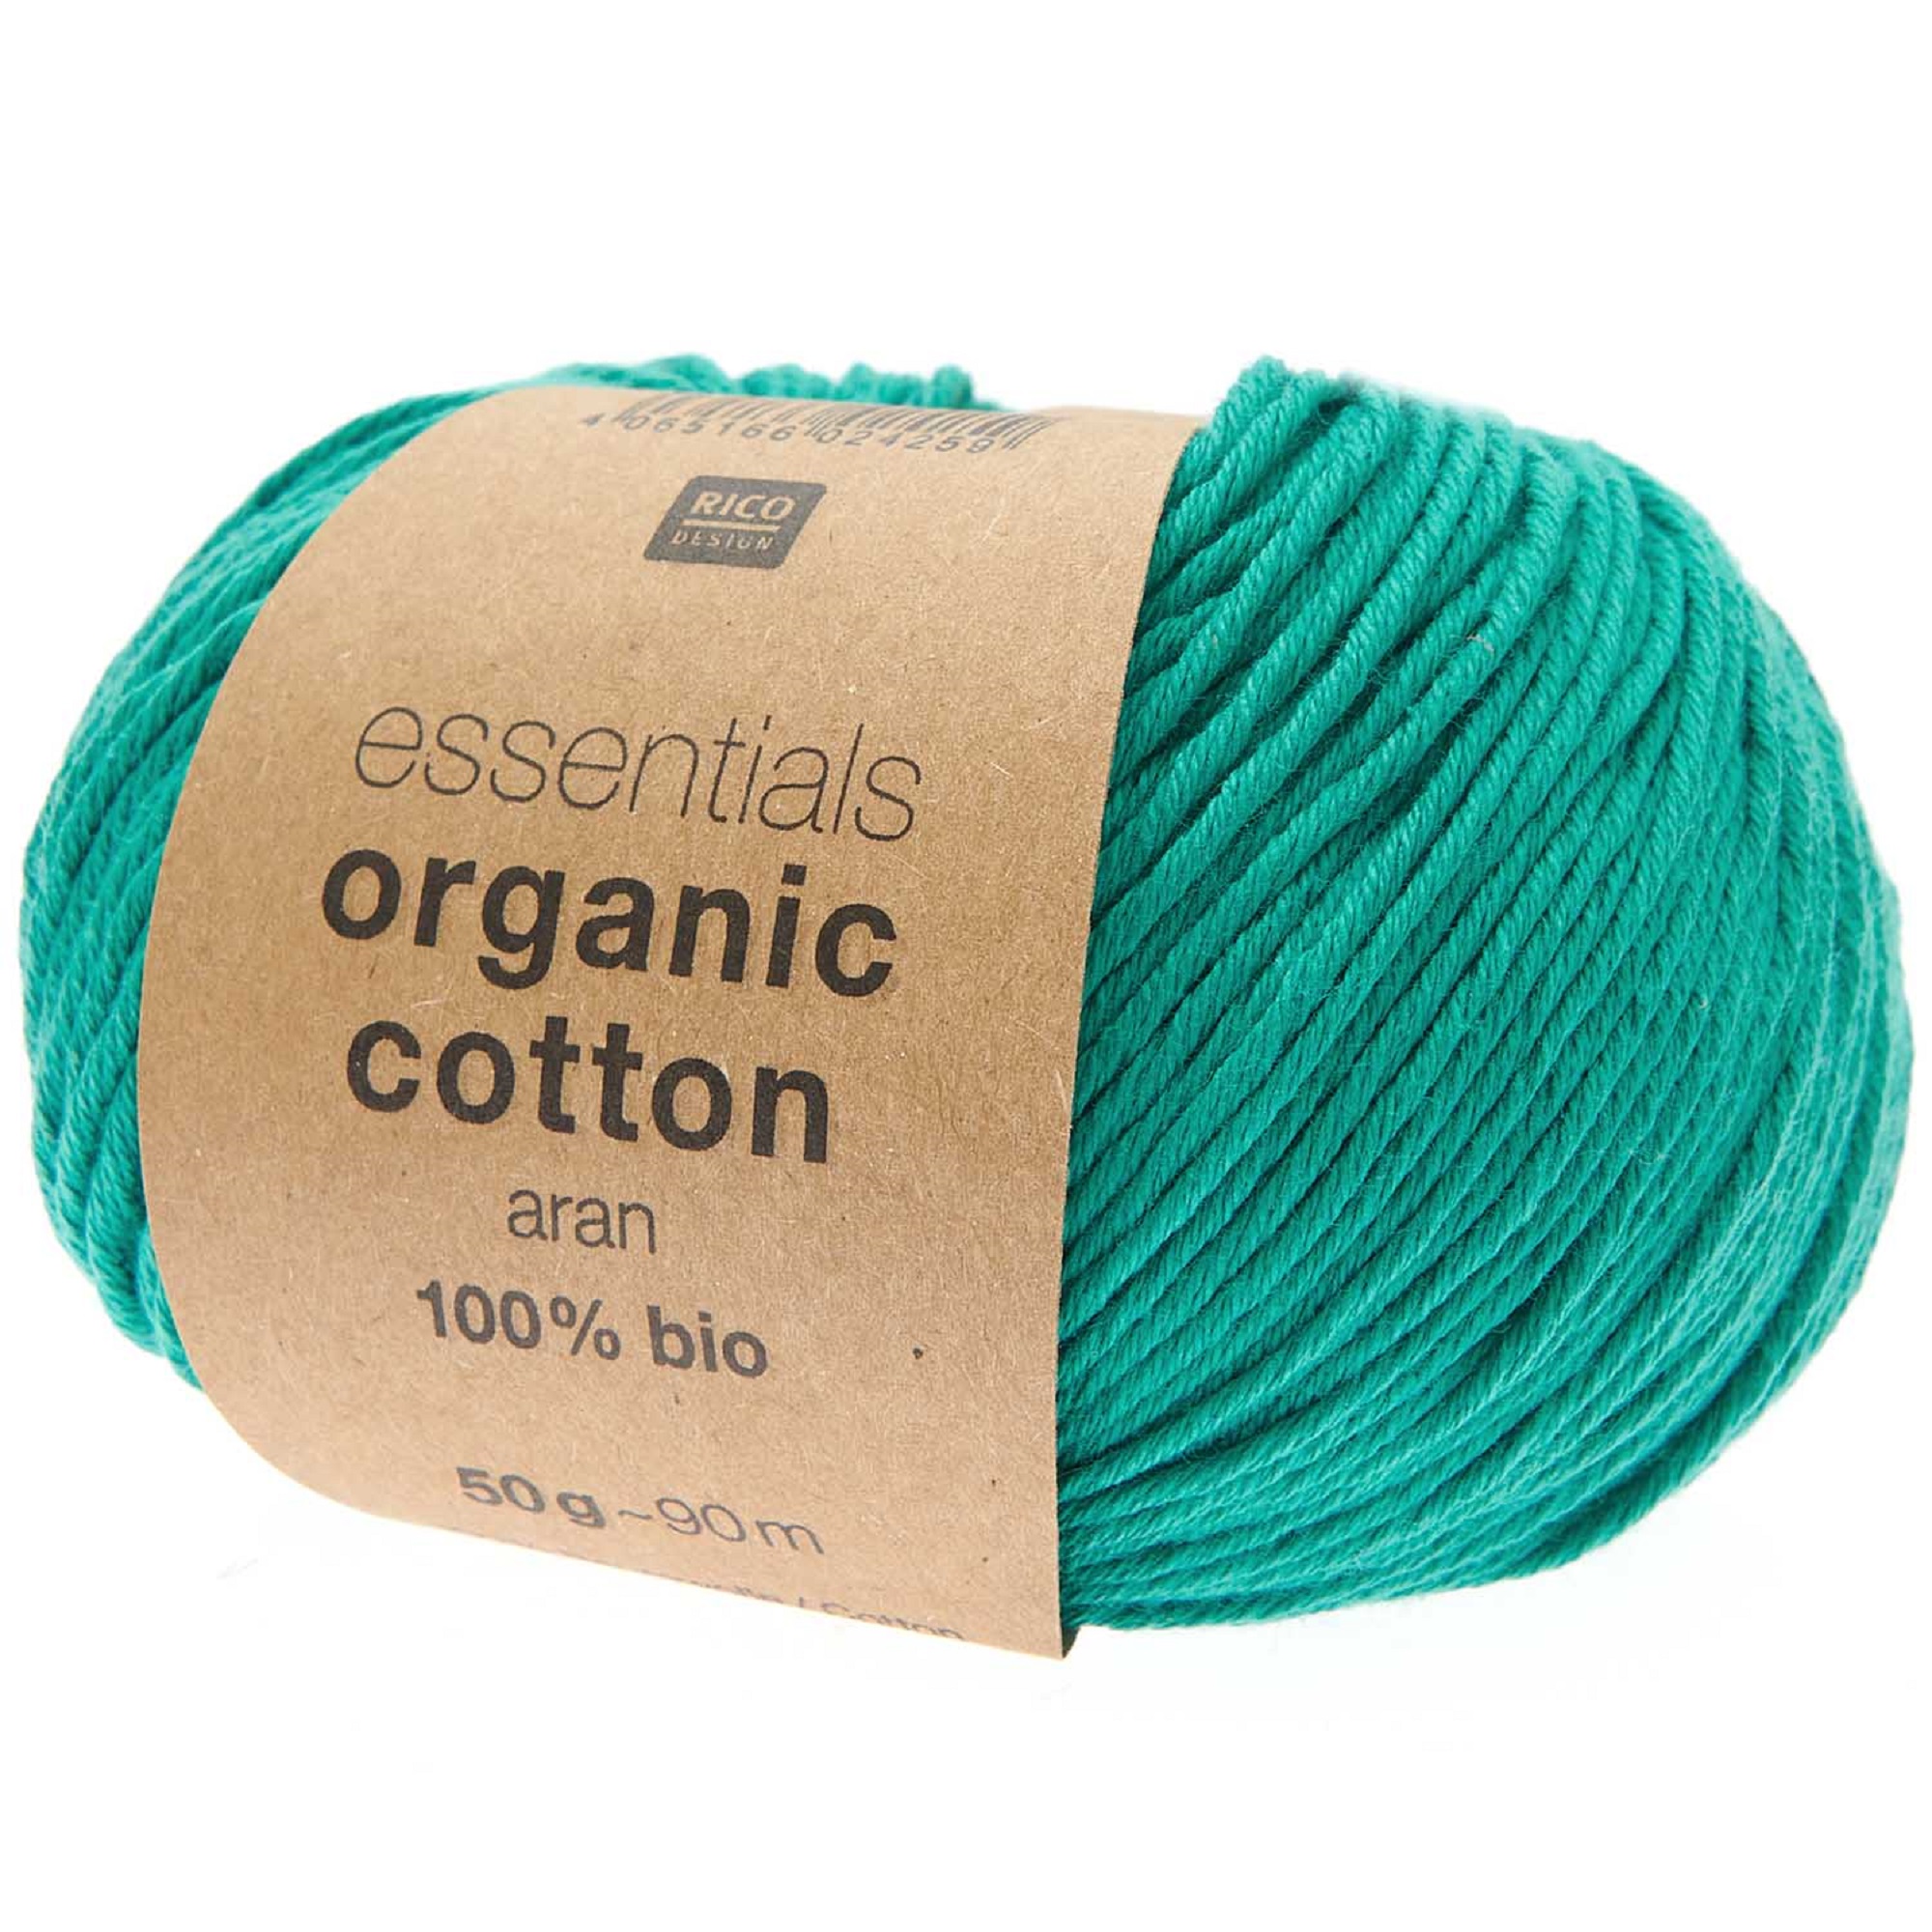 Rico Essentials Organic Cotton dk 